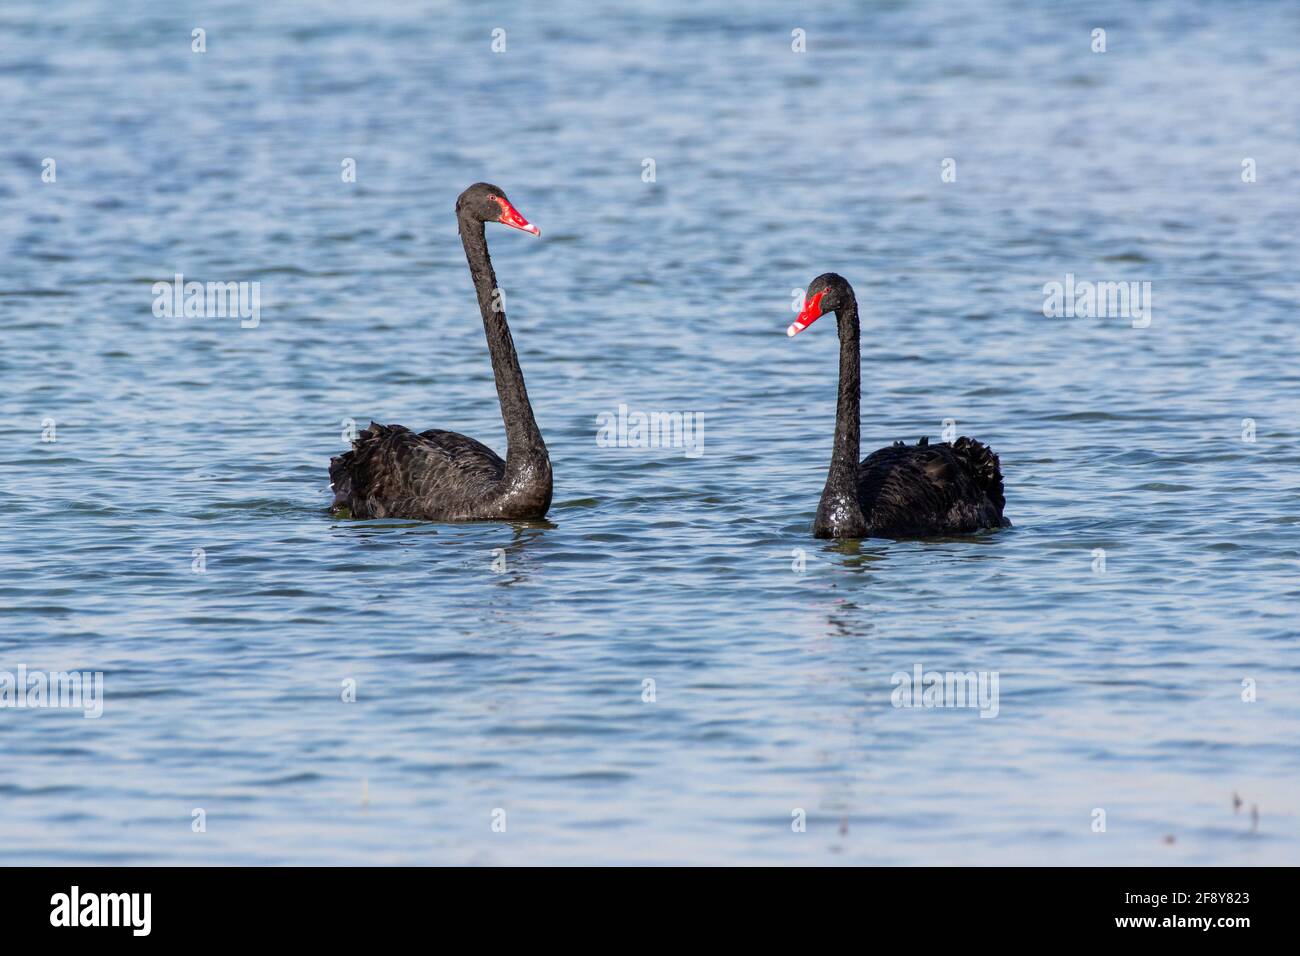 A pair of of introduced Black Swans (Cygnus atratus) swimming in Al Qudra Lake in Dubai, UAE. Stock Photo